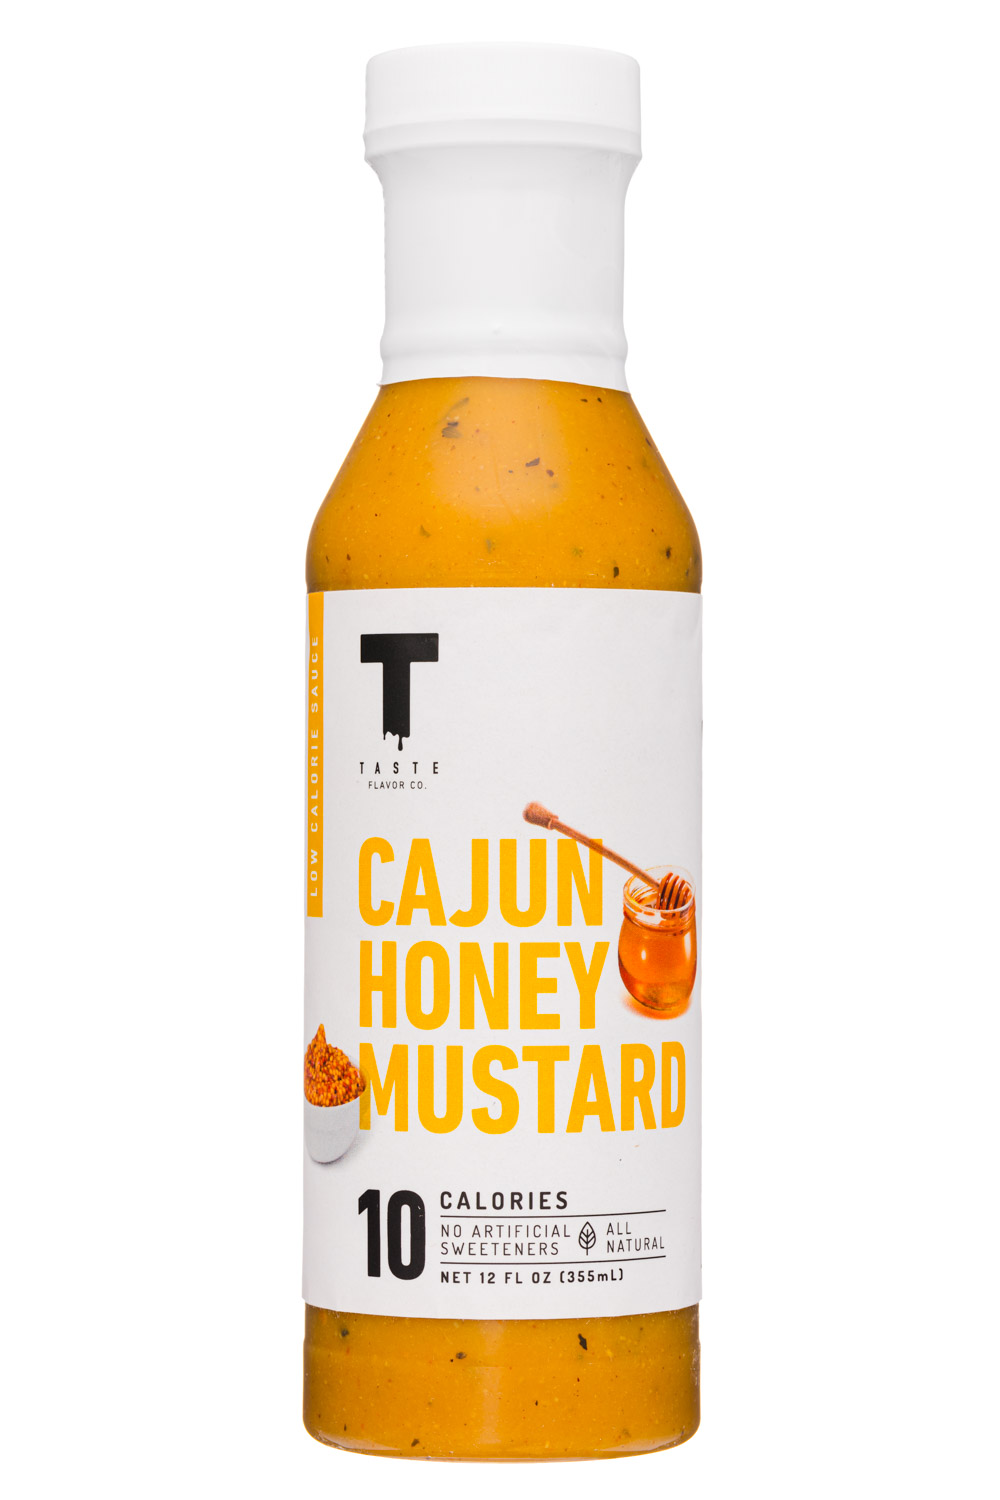 Cajun Honey Mustard